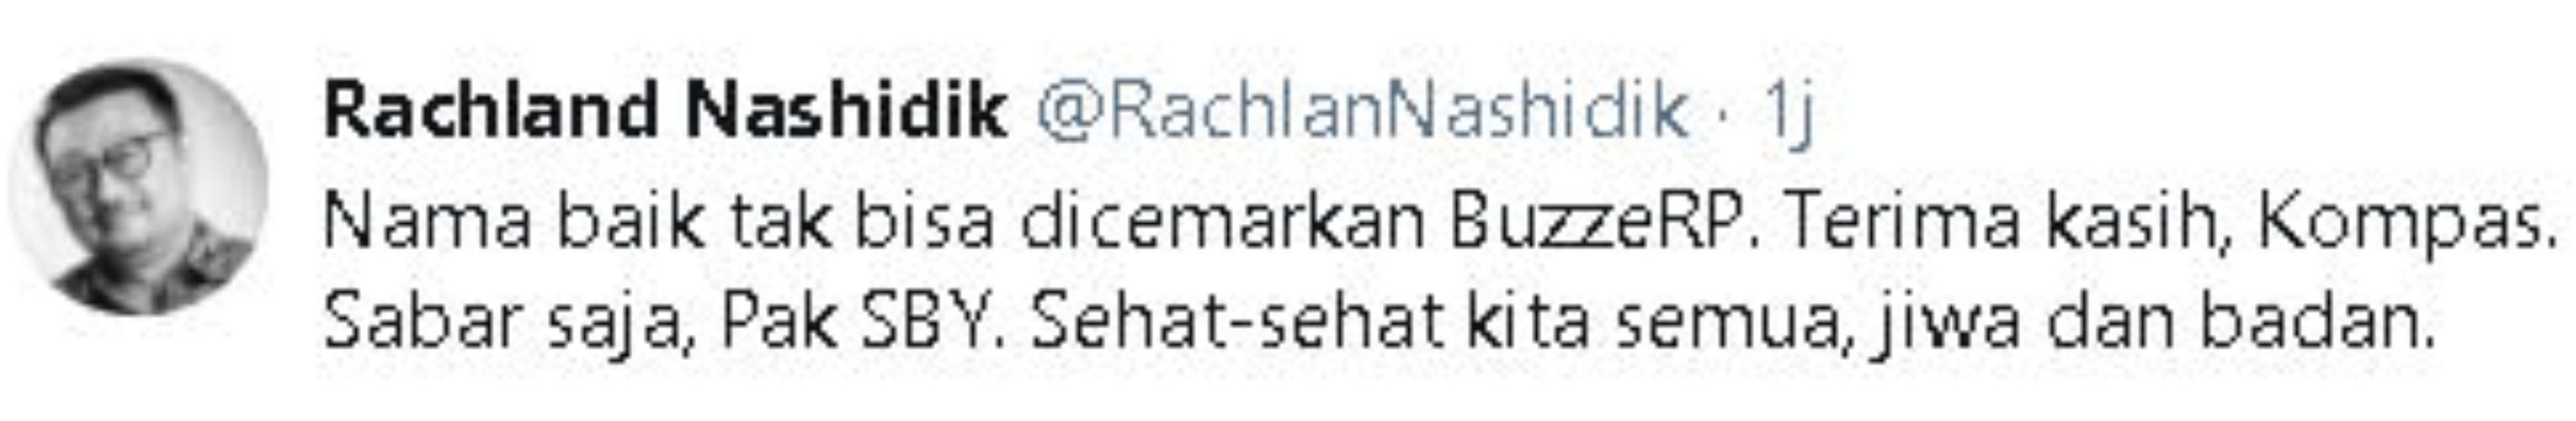 Komentar Rachland Nashidik soal dukungan untuk SBY.